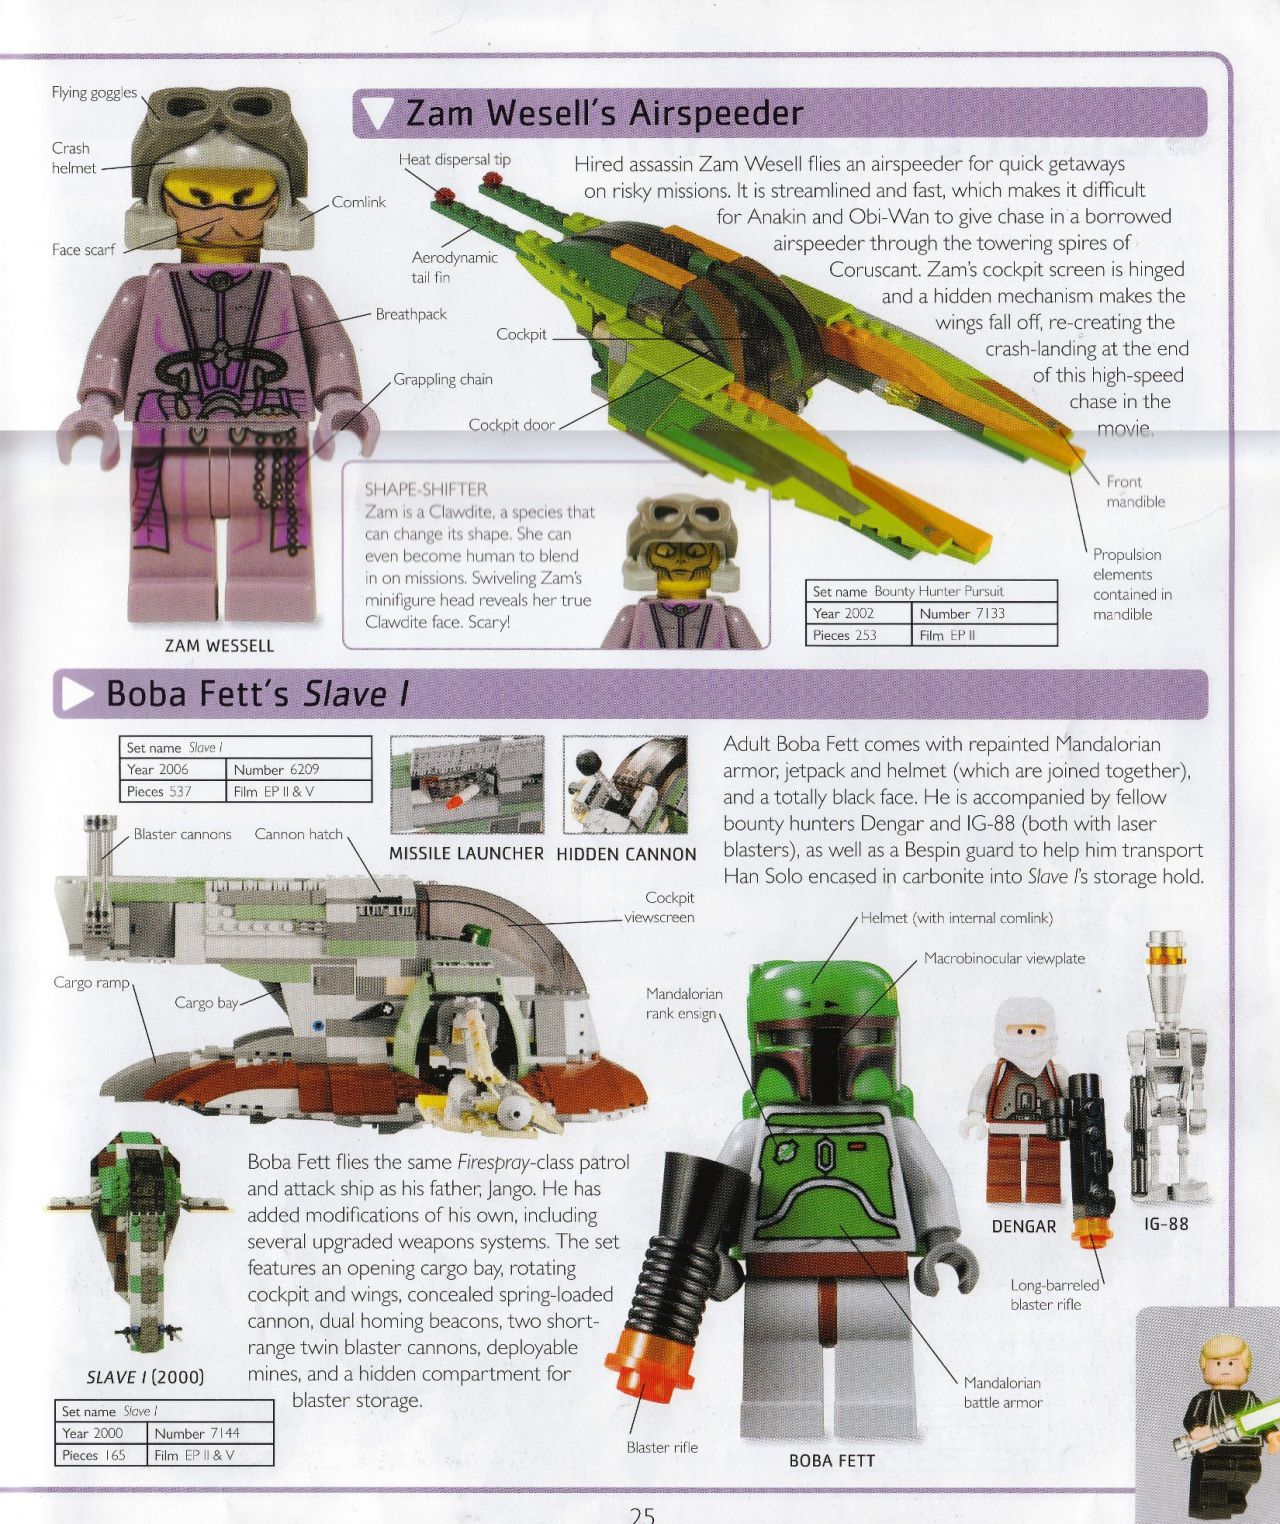 Lego Star Wars The Visual Dictionary 2009 Lego Star Wars The Visual Dictionary 2009 26